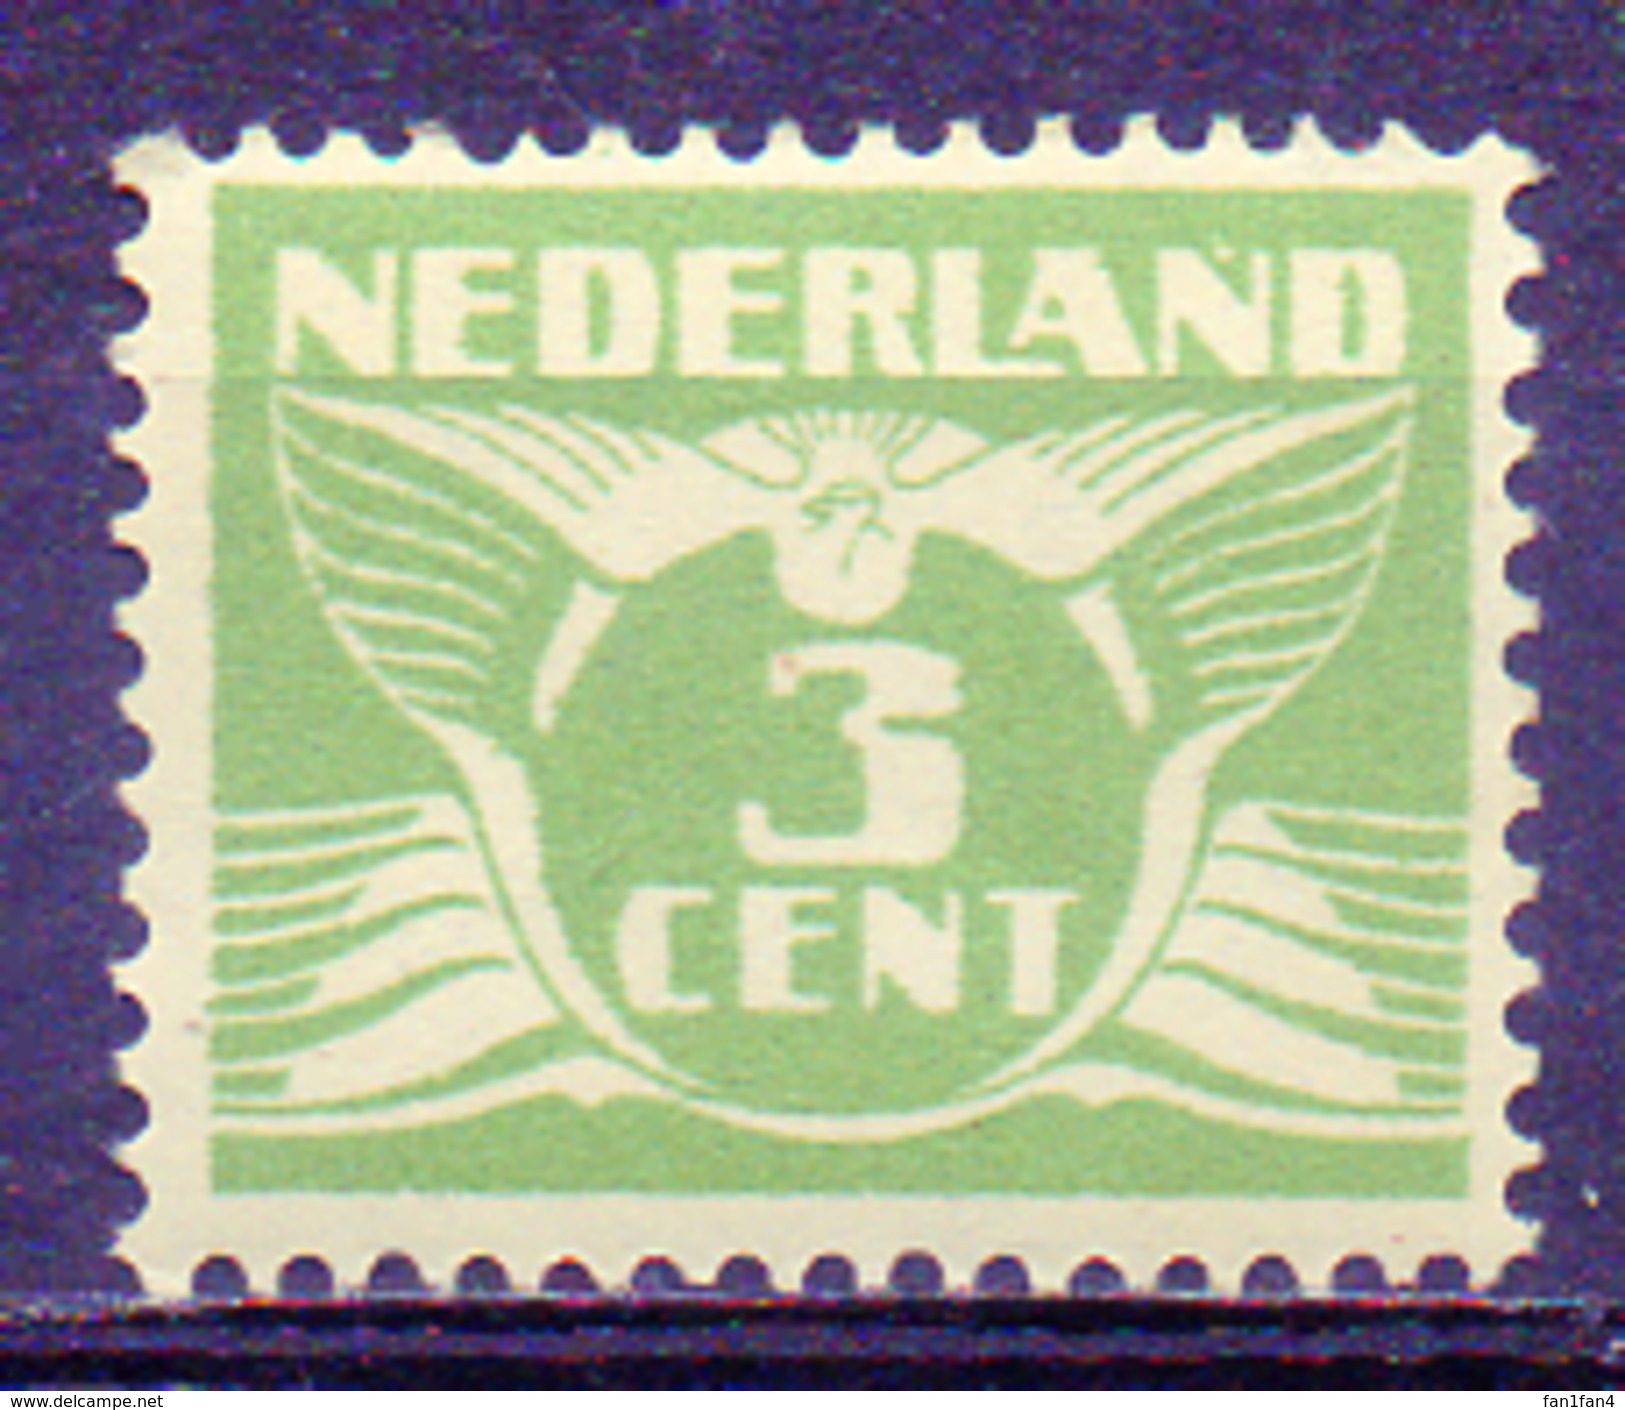 PAYS-BAS - (Royaume) - 1924-27 - N° 136 - 3 C. Vert-jaune - (Chiffre) - Unused Stamps